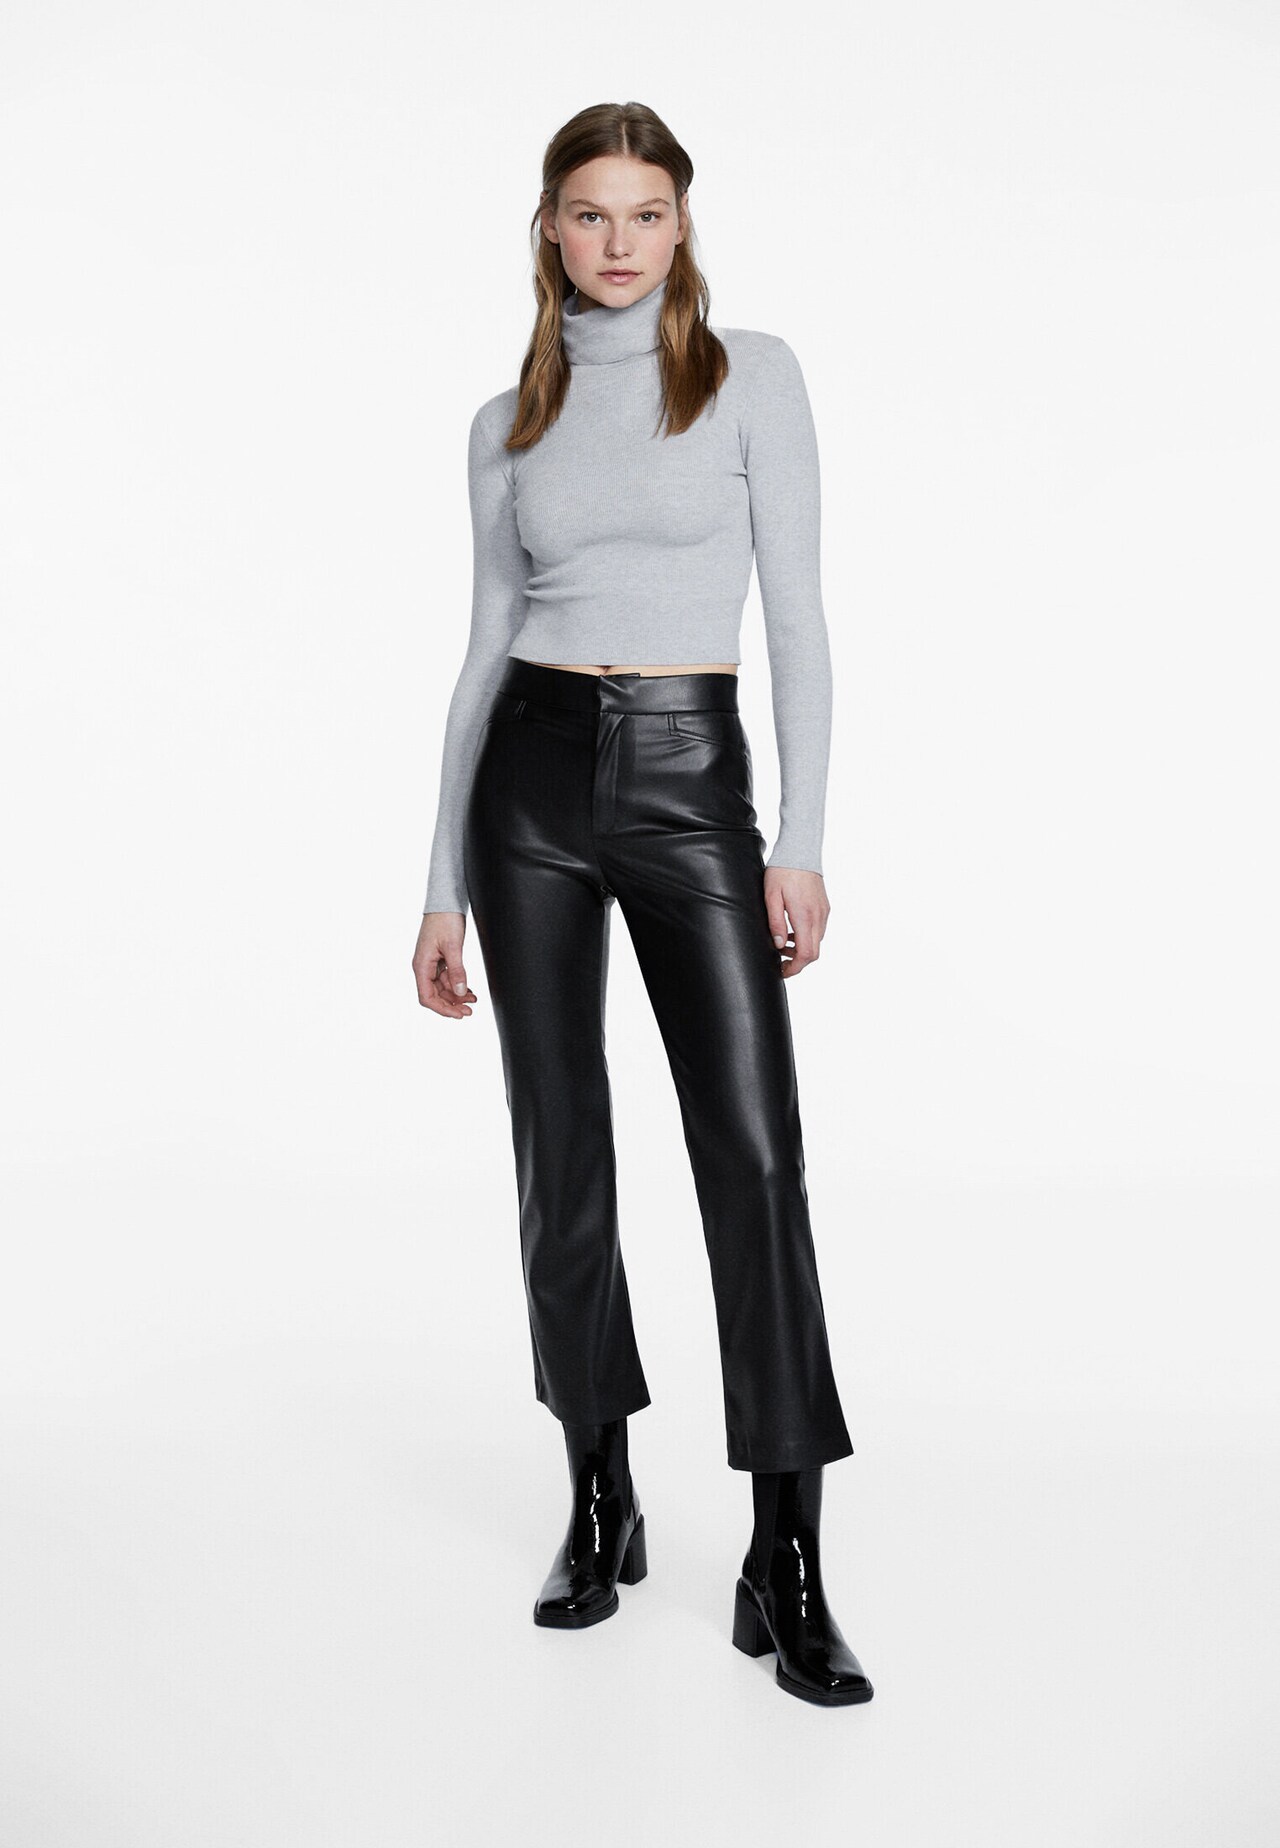 Faux leather kick flare trousers - Women's fashion